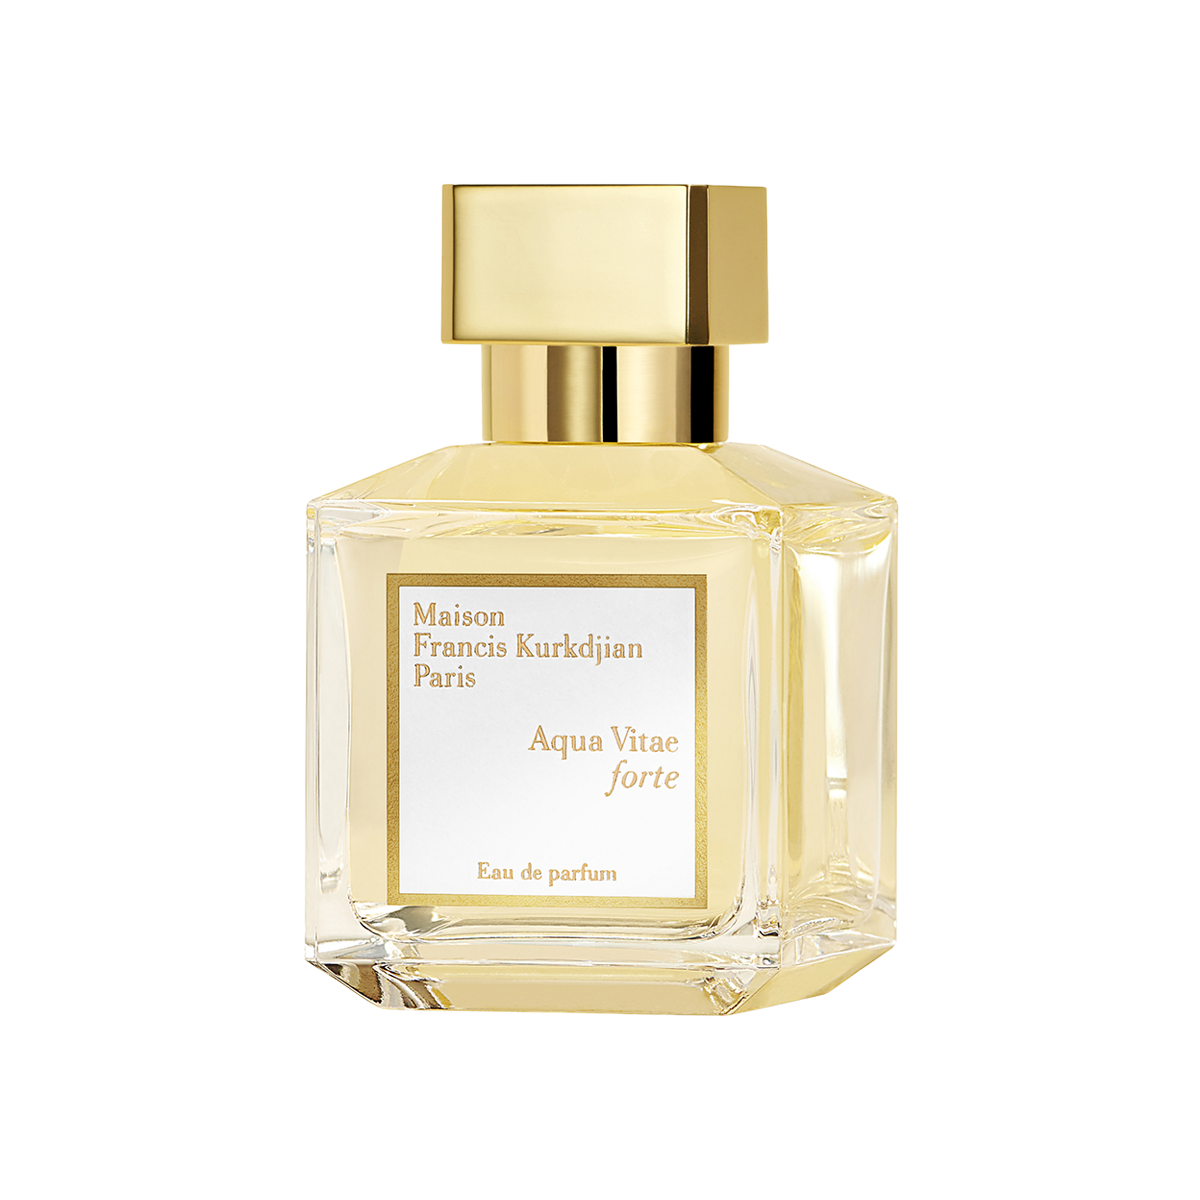 Maison Francis Kurkdjian - Aqua Vitae forte Eau de Parfum